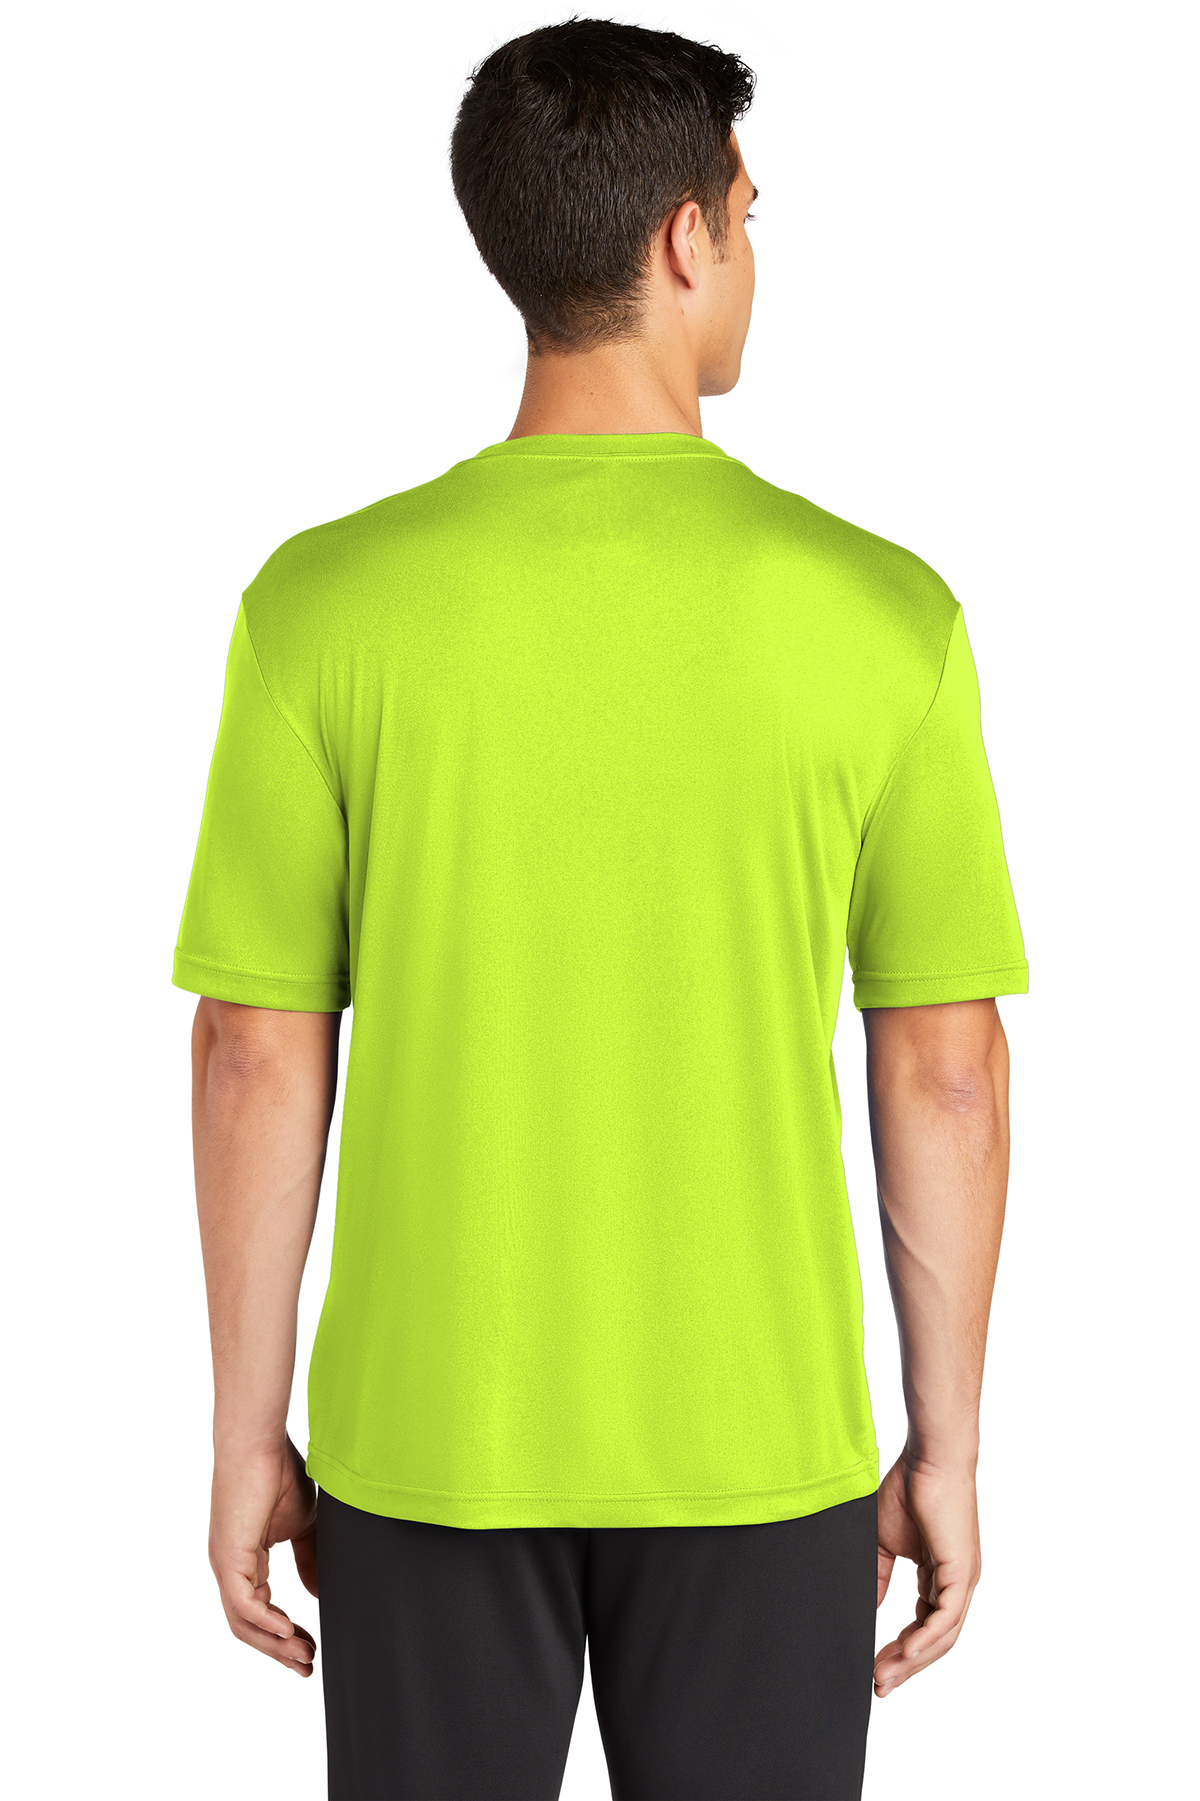 Carrierstyle  T-Shirt  Kiteboarding 360 Neuware